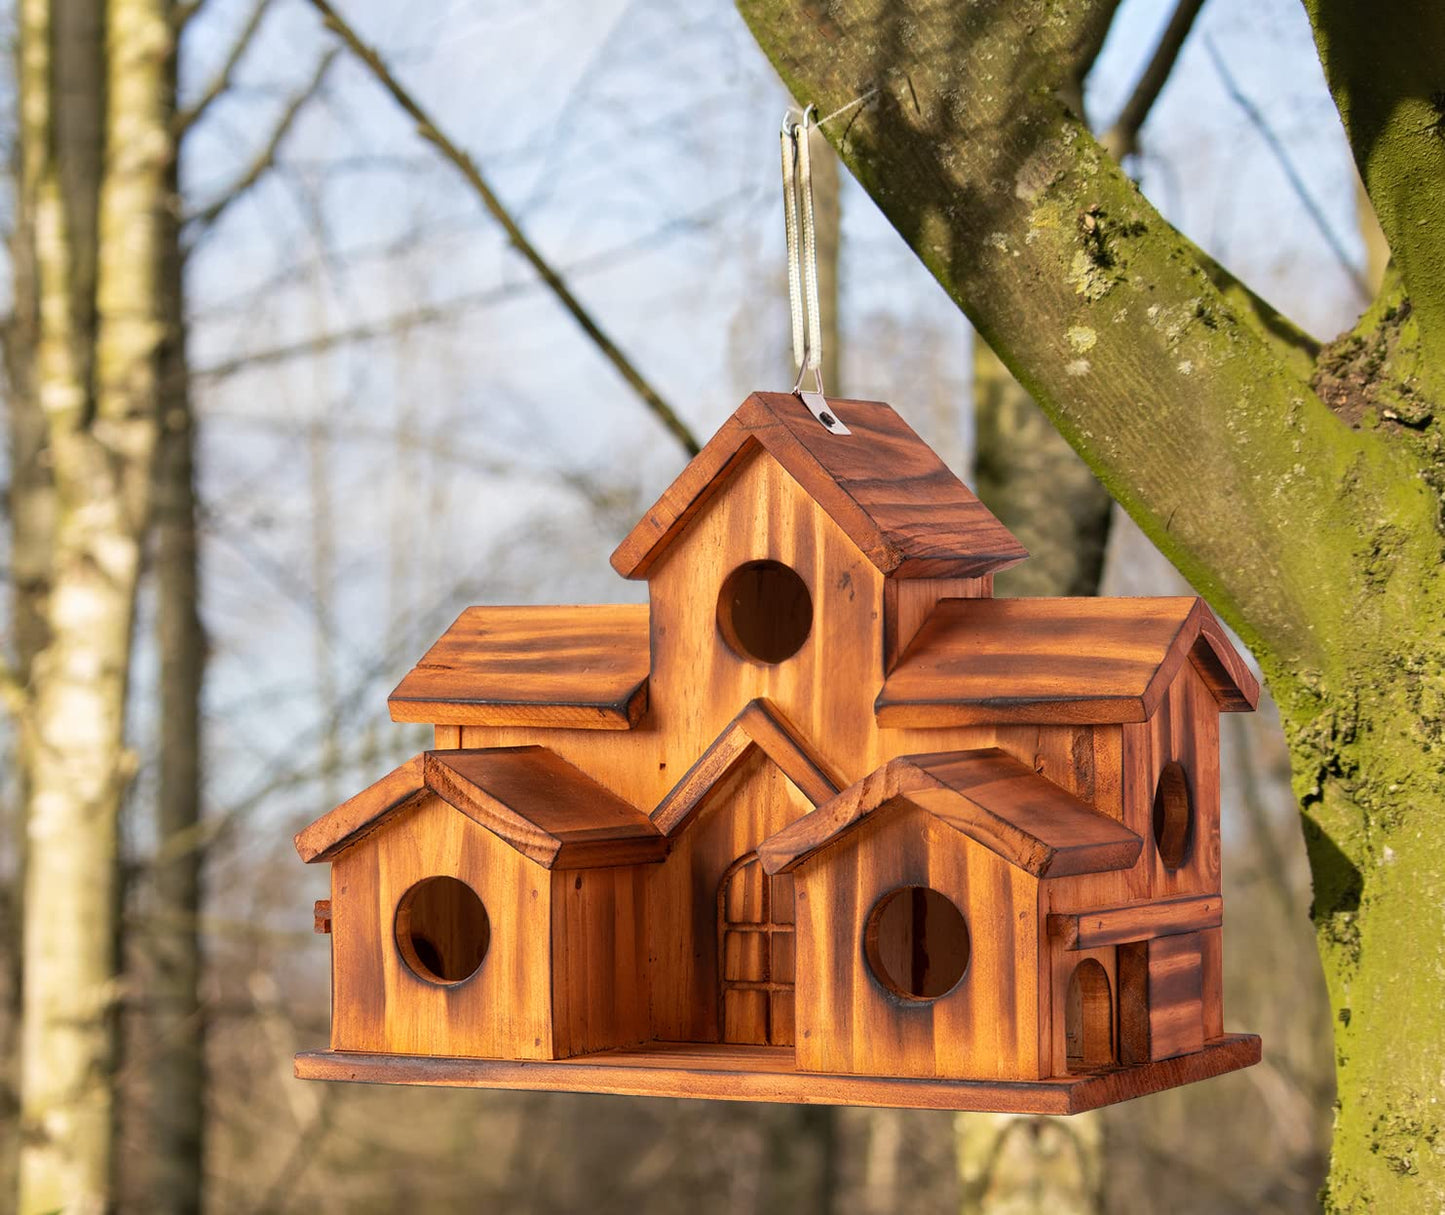 COLEBA Bird Houses for Outside,Outdoor 5 Hole Bird House Room for 5 Bird Families Bluebird Finch Cardinals Hanging Birdhouse for Garden (Brown - Set